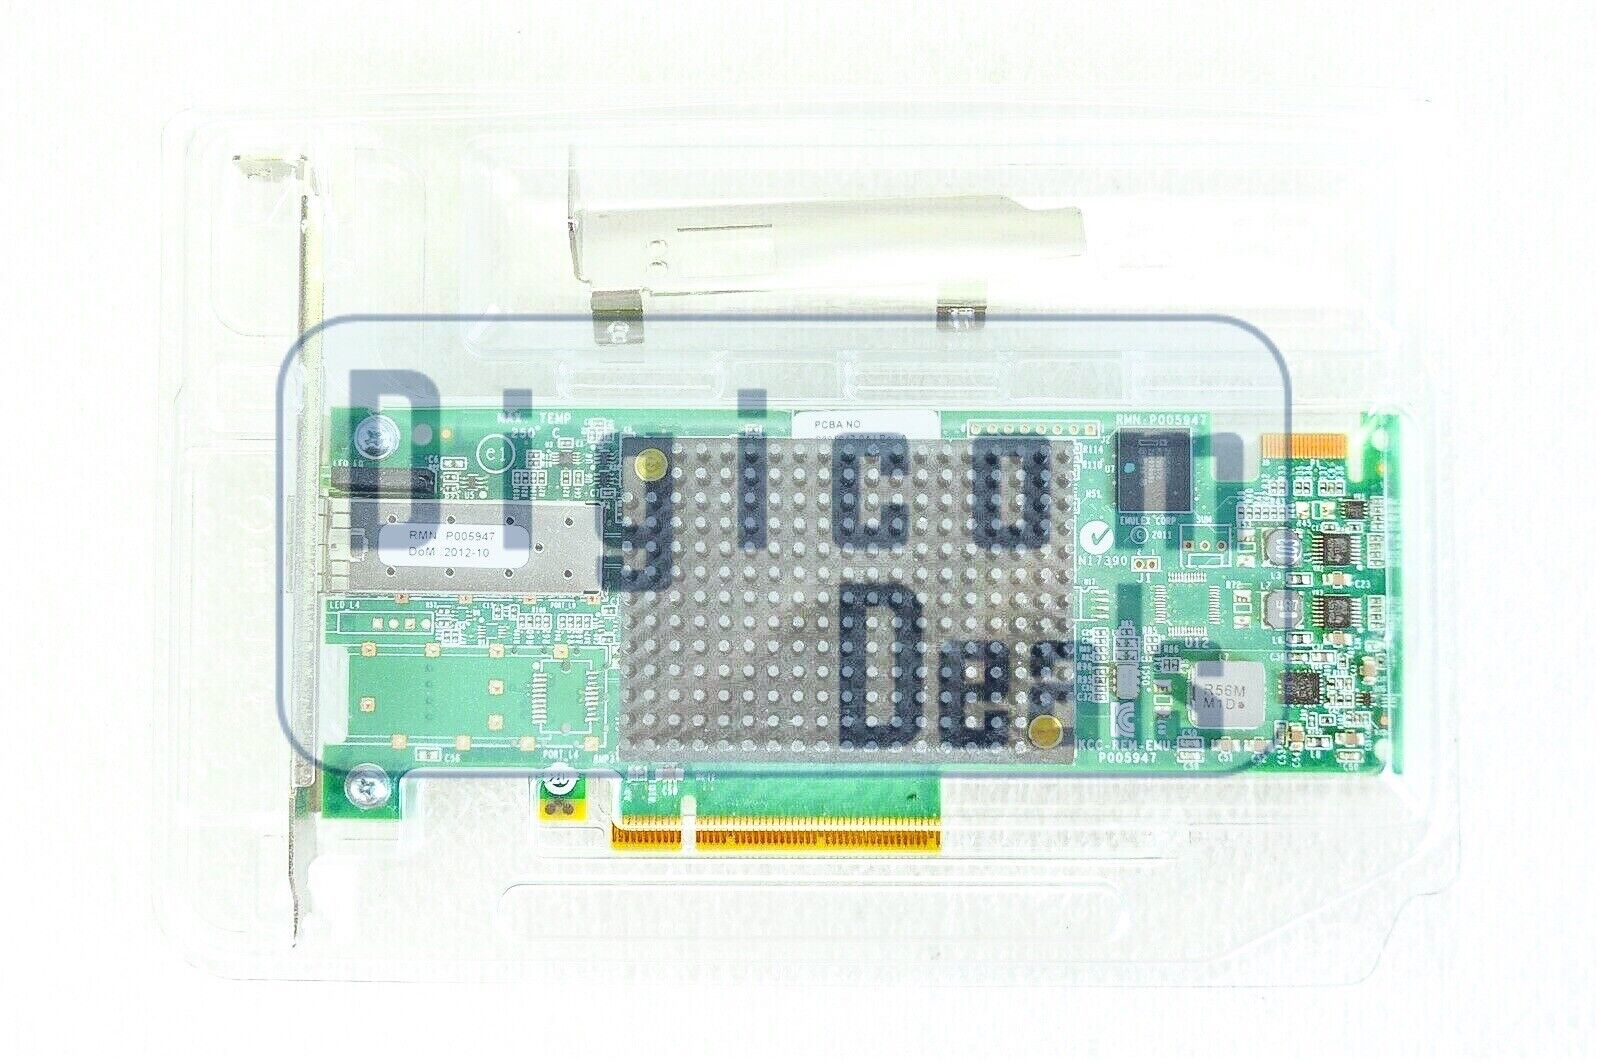 EMULEX LPE16000-E 16GB FIBRE CHANNEL PCI-E 1-PORT HBA CARD W/ BOTH BRACKETS